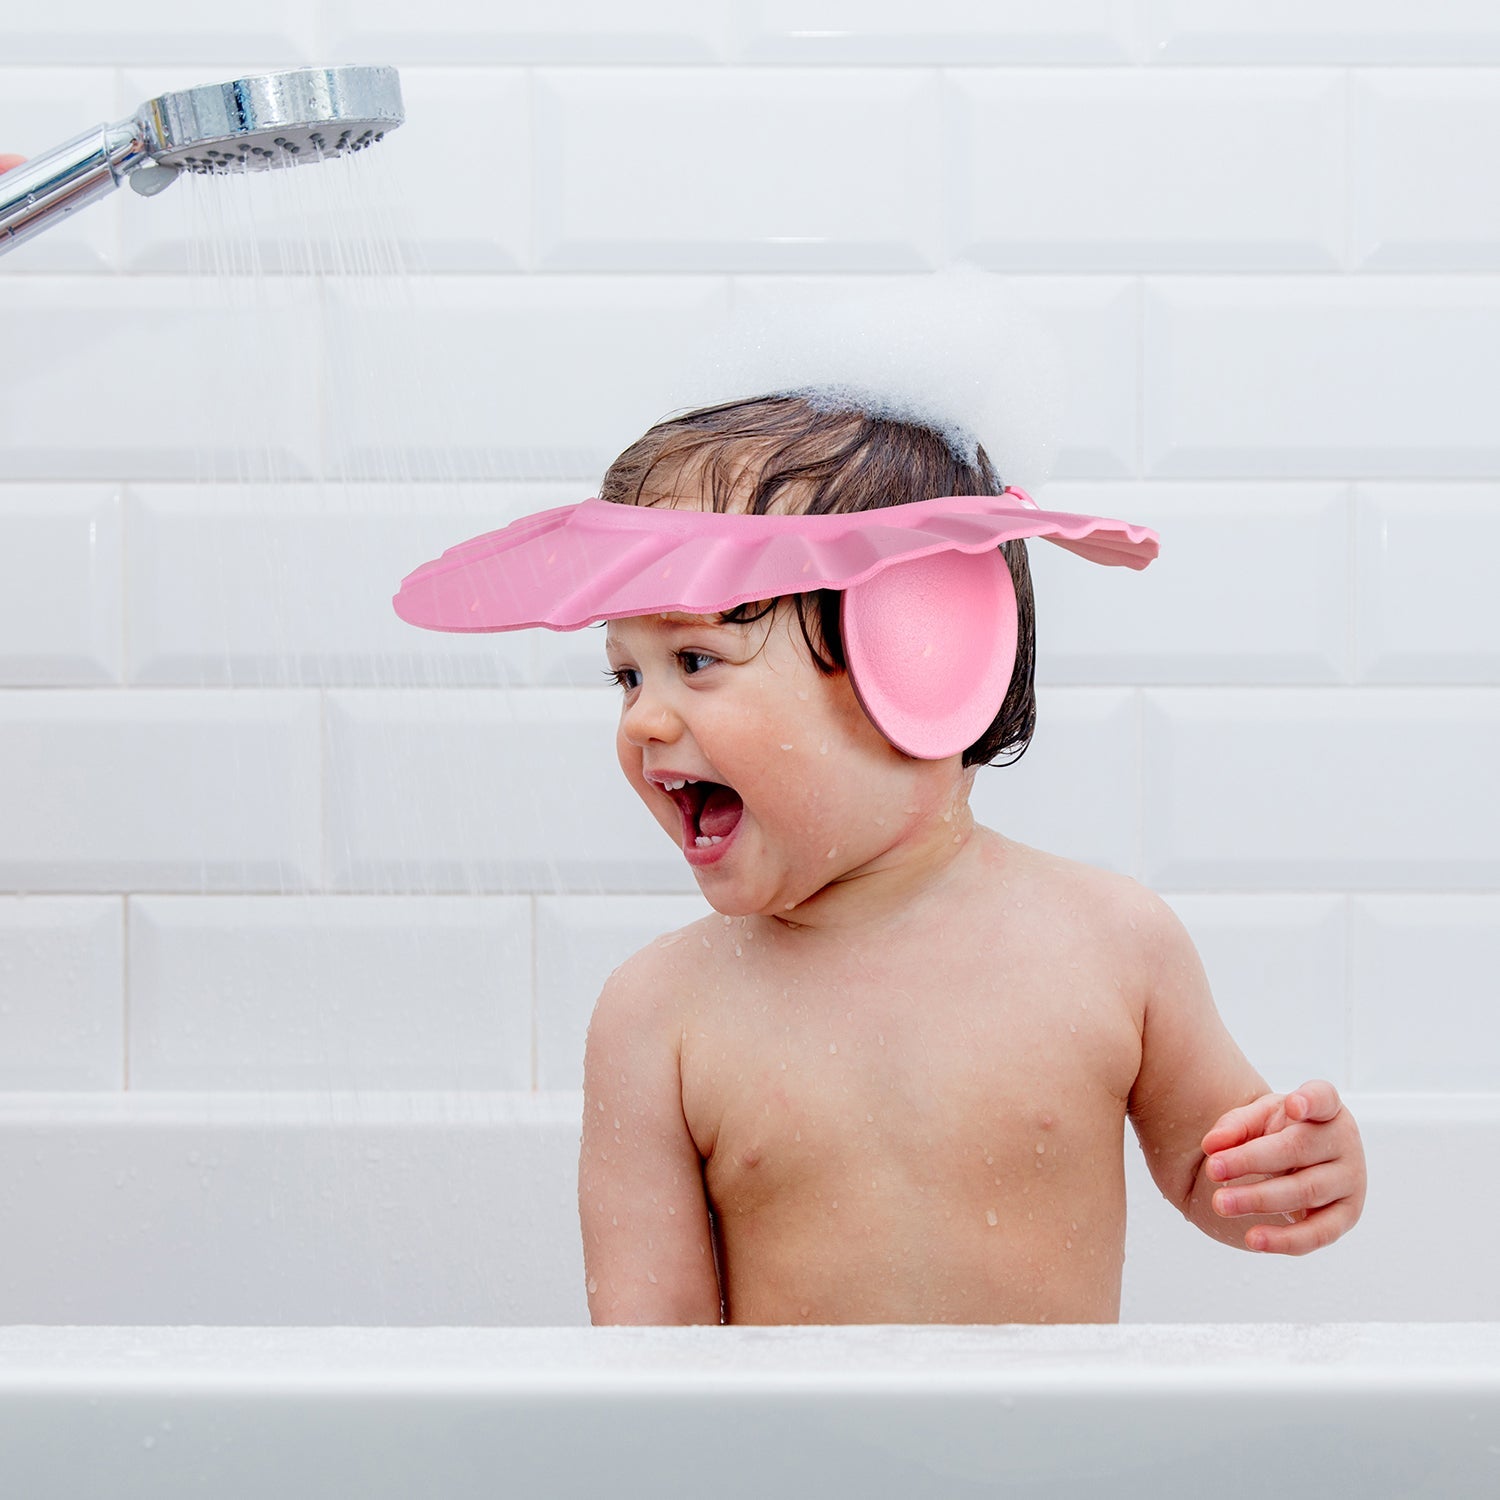 Baby Moo No Tears Safe Adjustable Bathing Shower Cap Pack of 2 - Pink, Blue